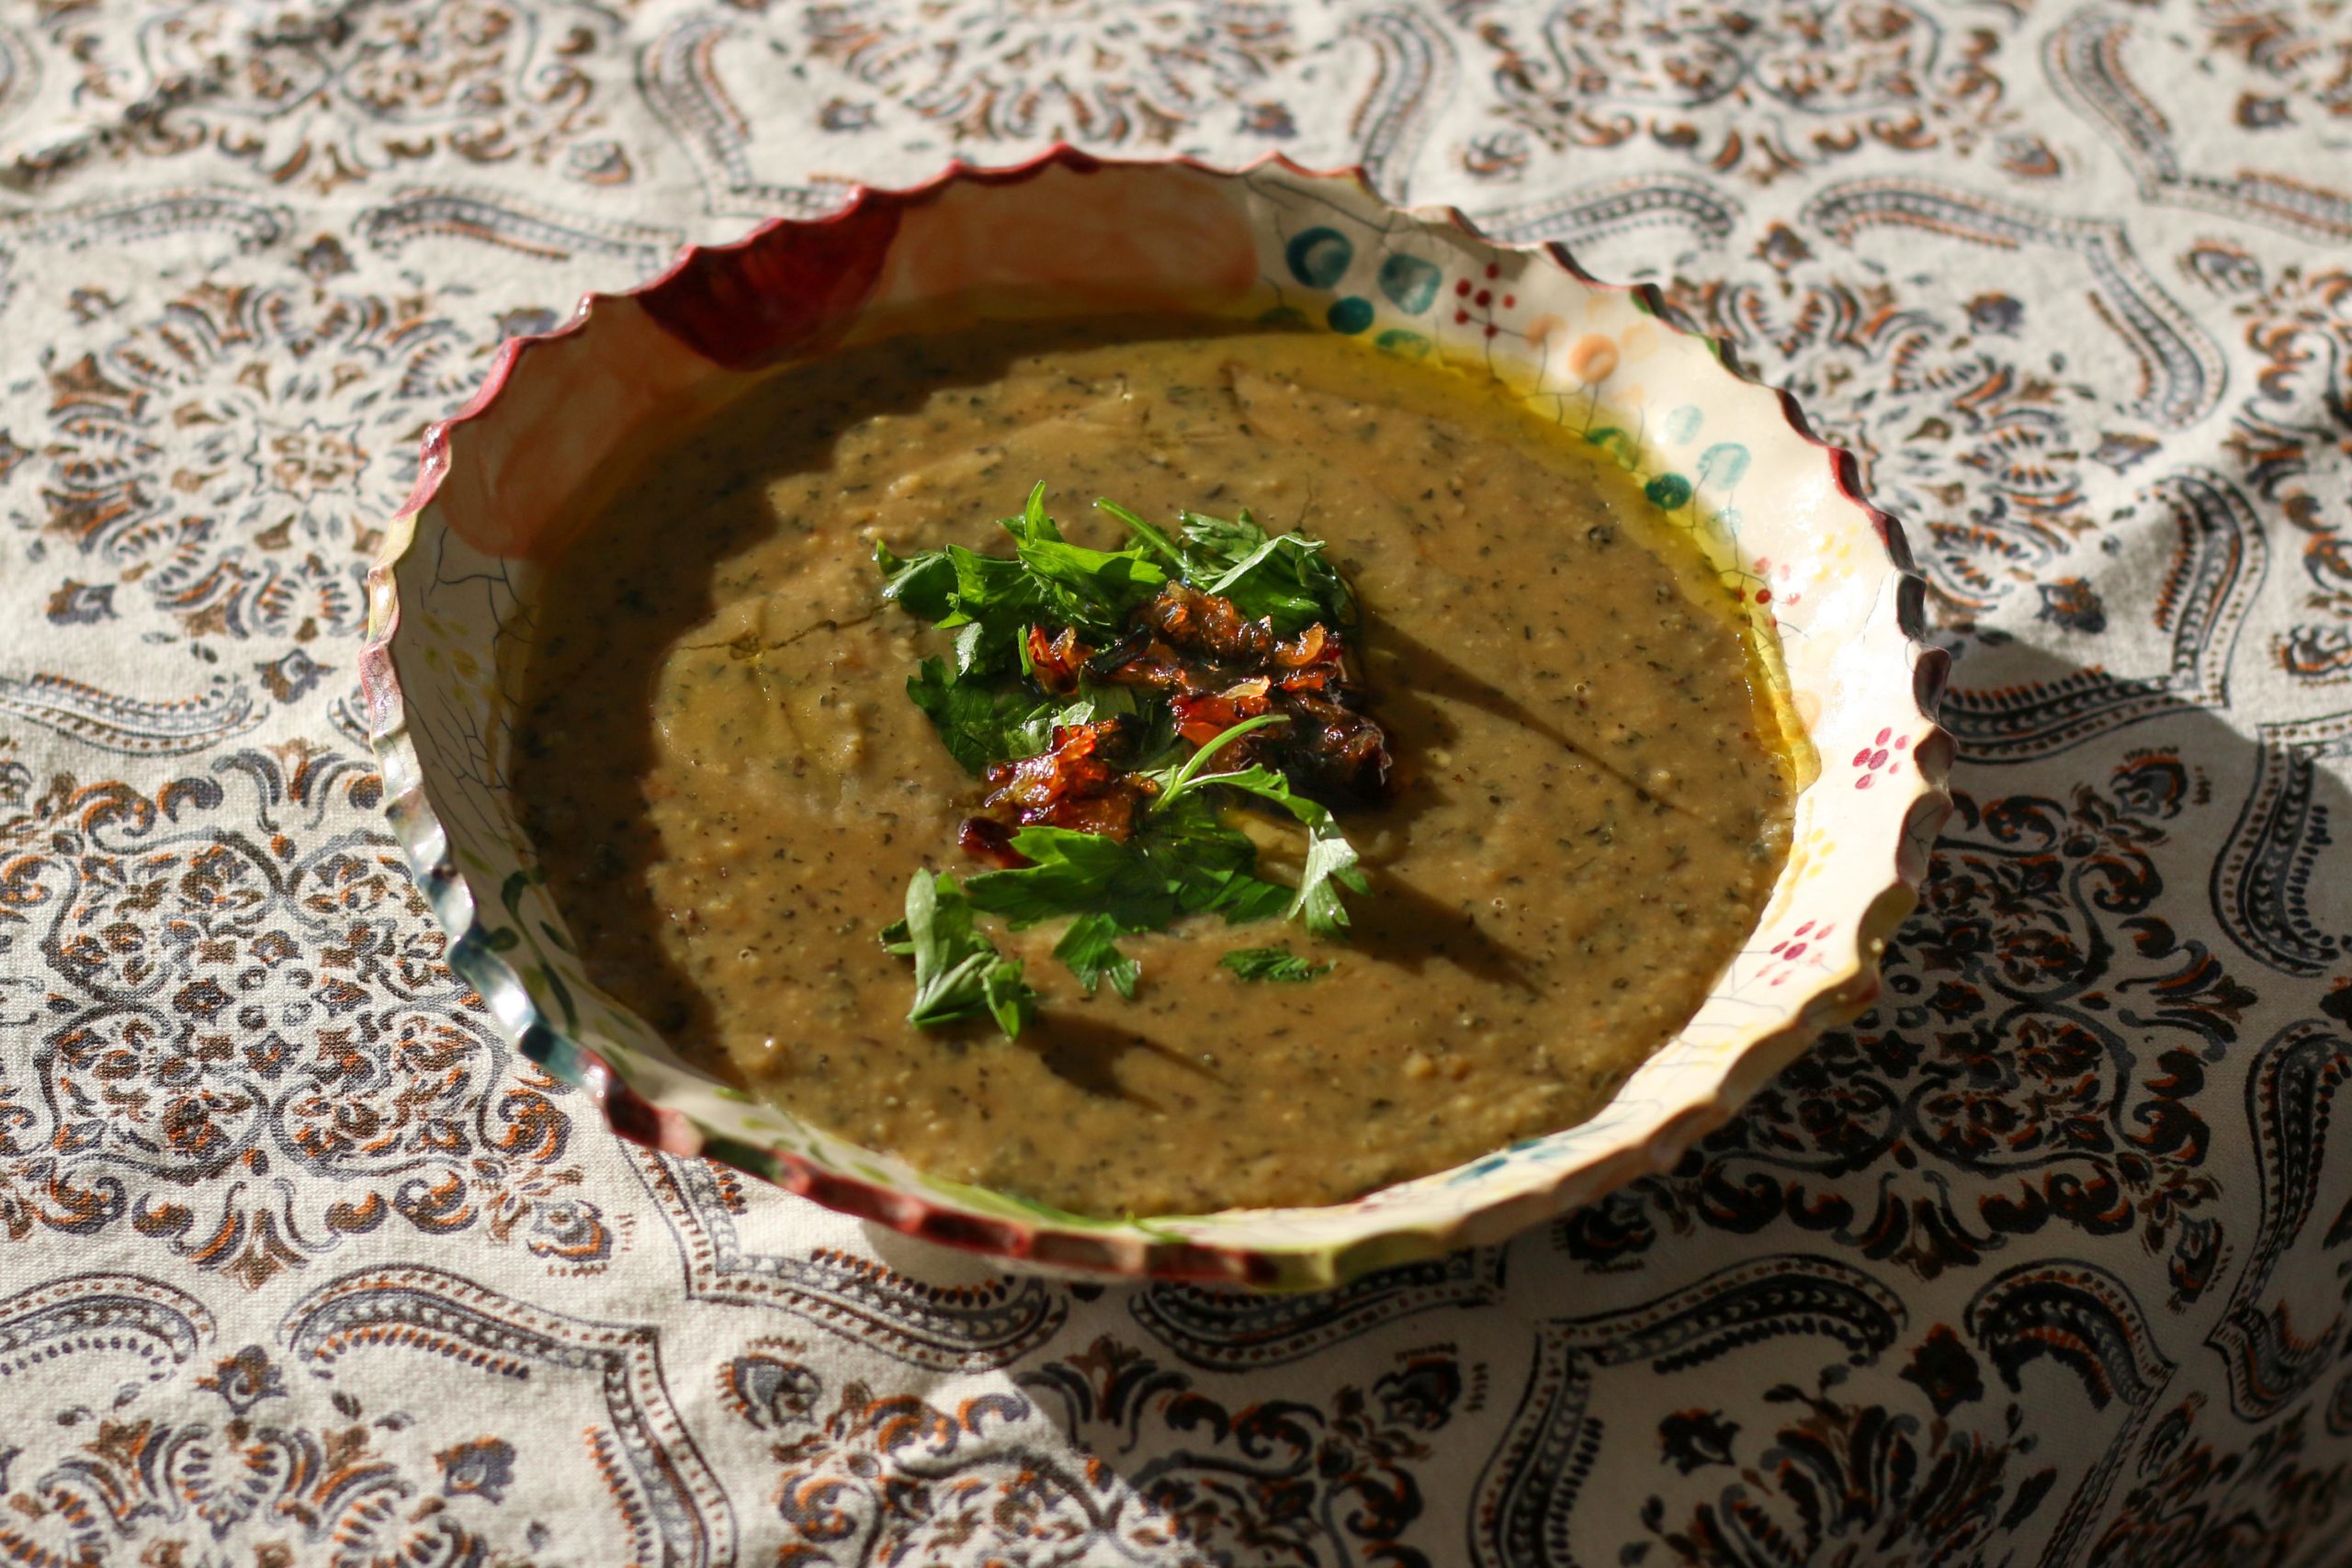 A bowl of broad bean stew called Bissara